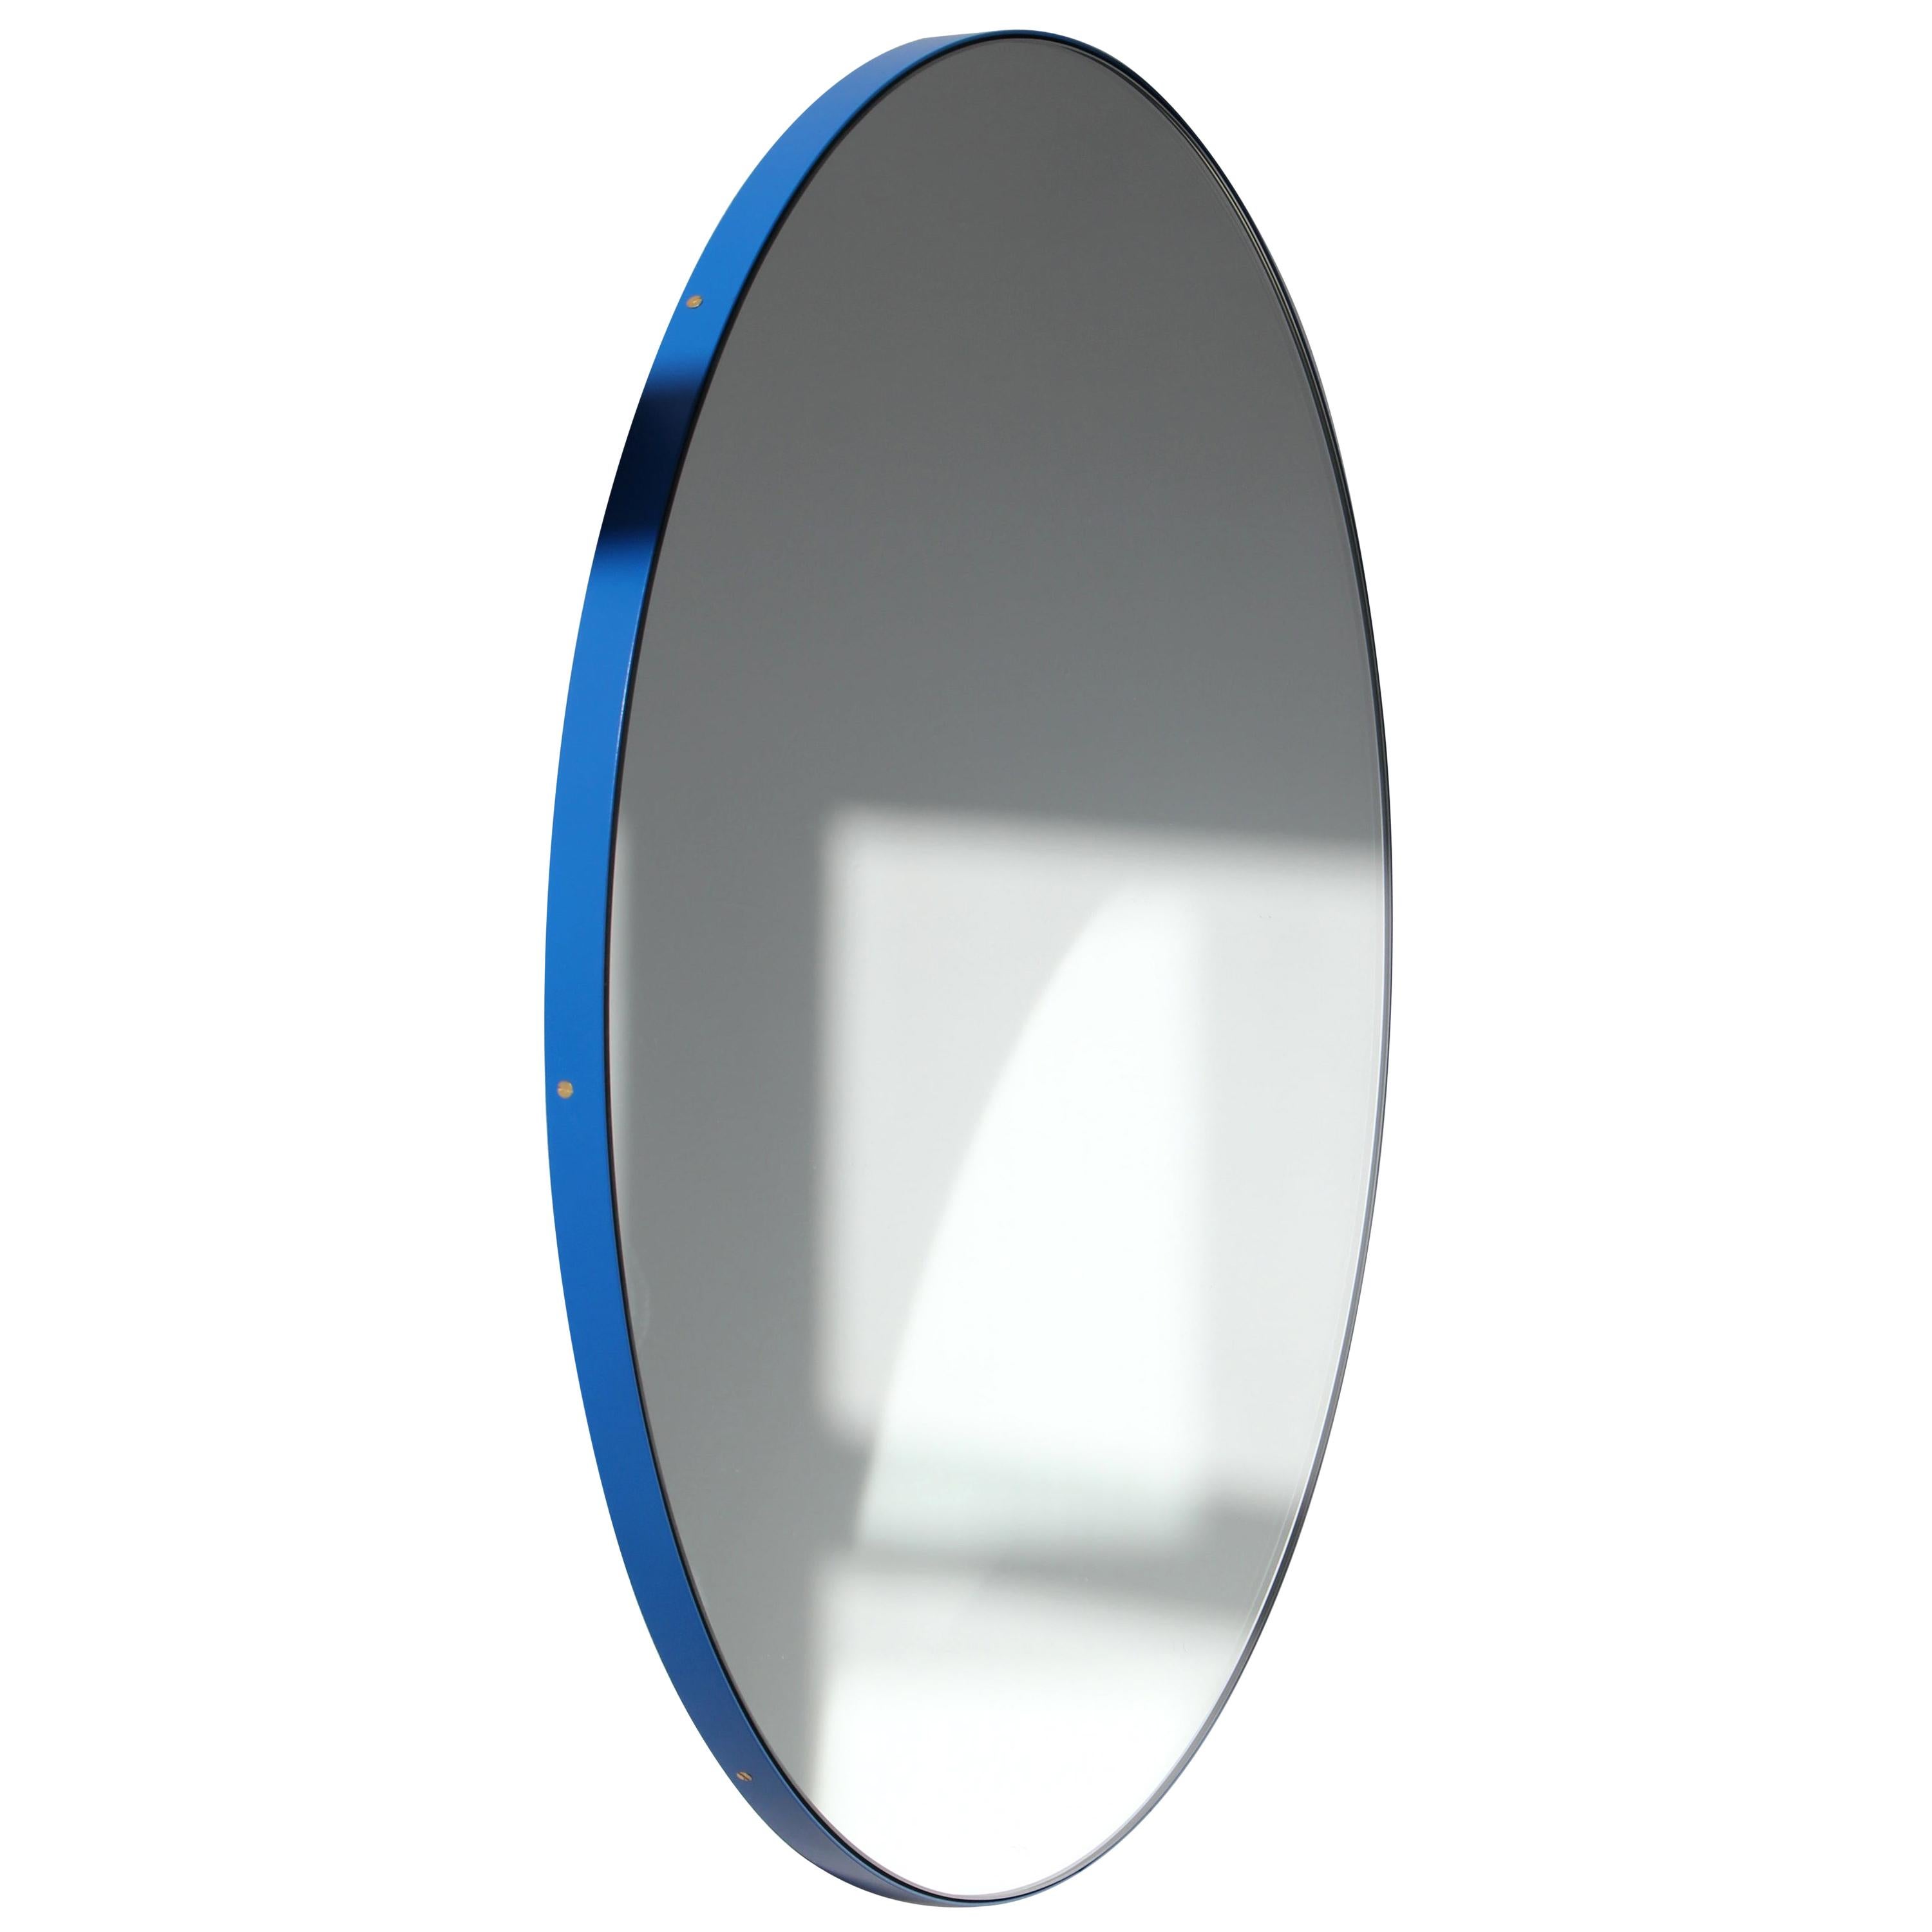 Orbis Round Bespoke Contemporary Mirror with Blue Frame - Regular